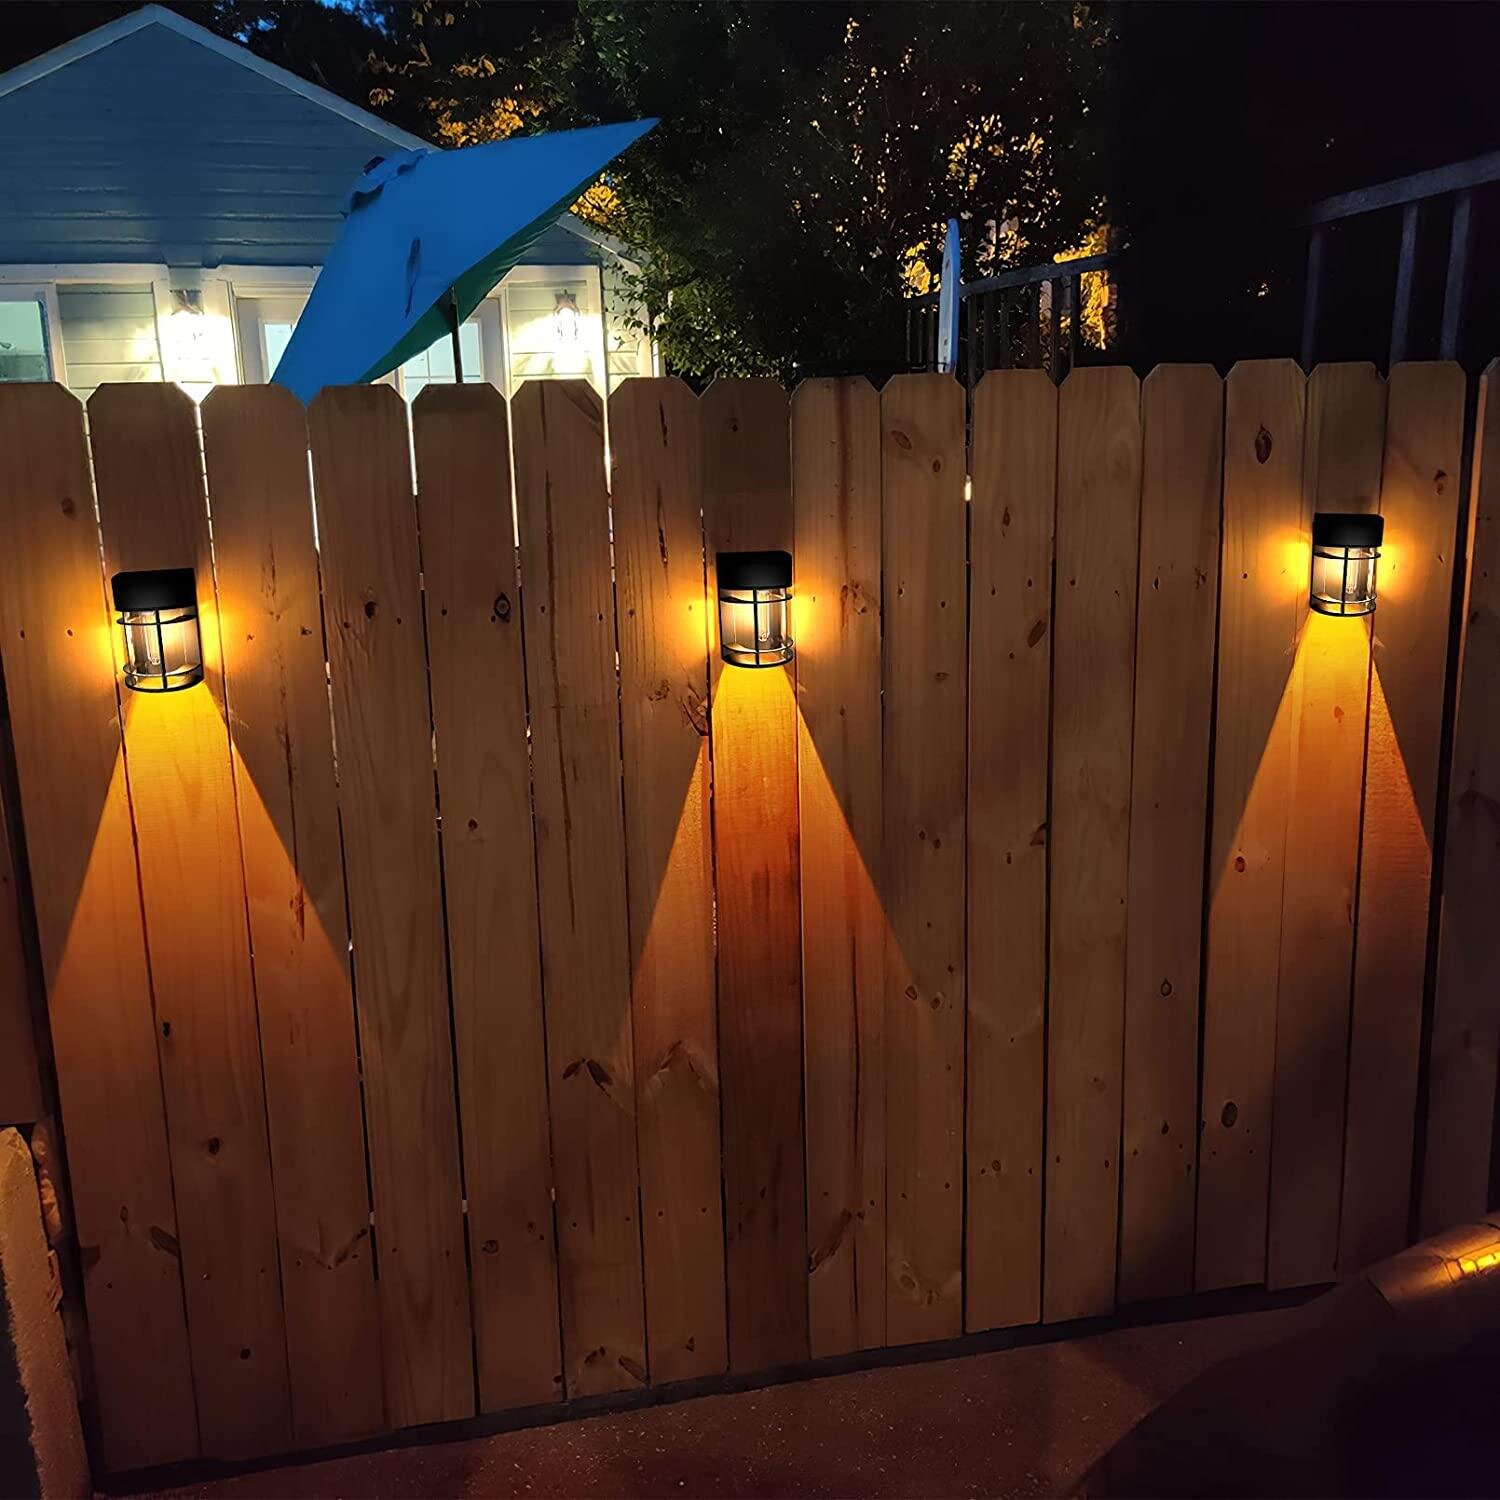 Outdoor LED Solar Light Bulb Light Waterproof Wall Lawn Decorative Hanging Lamp 